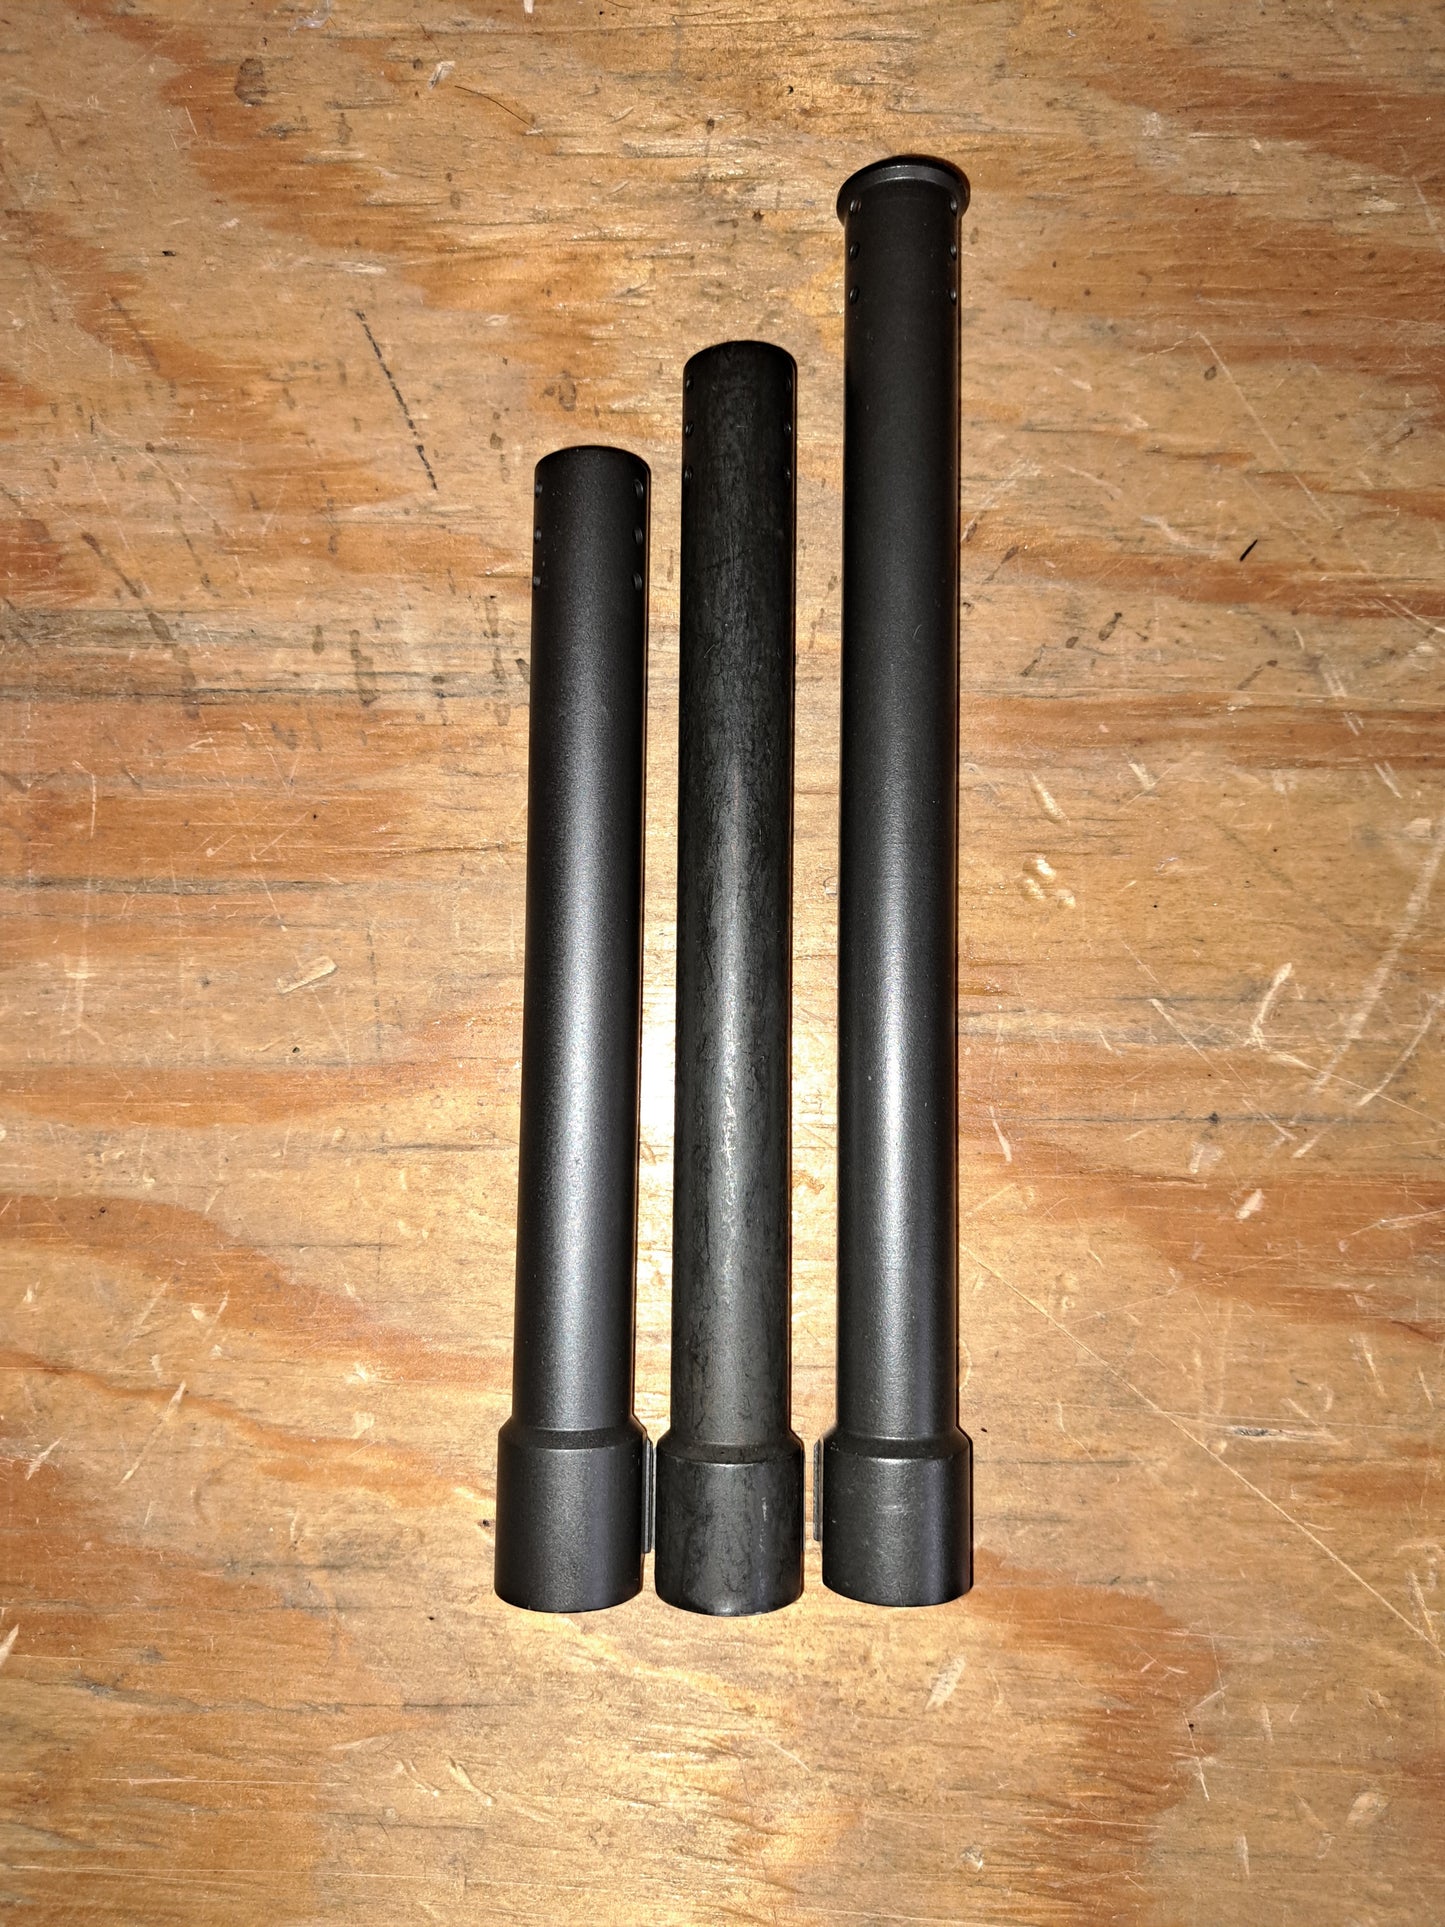 South African R6 - LMG gas tube